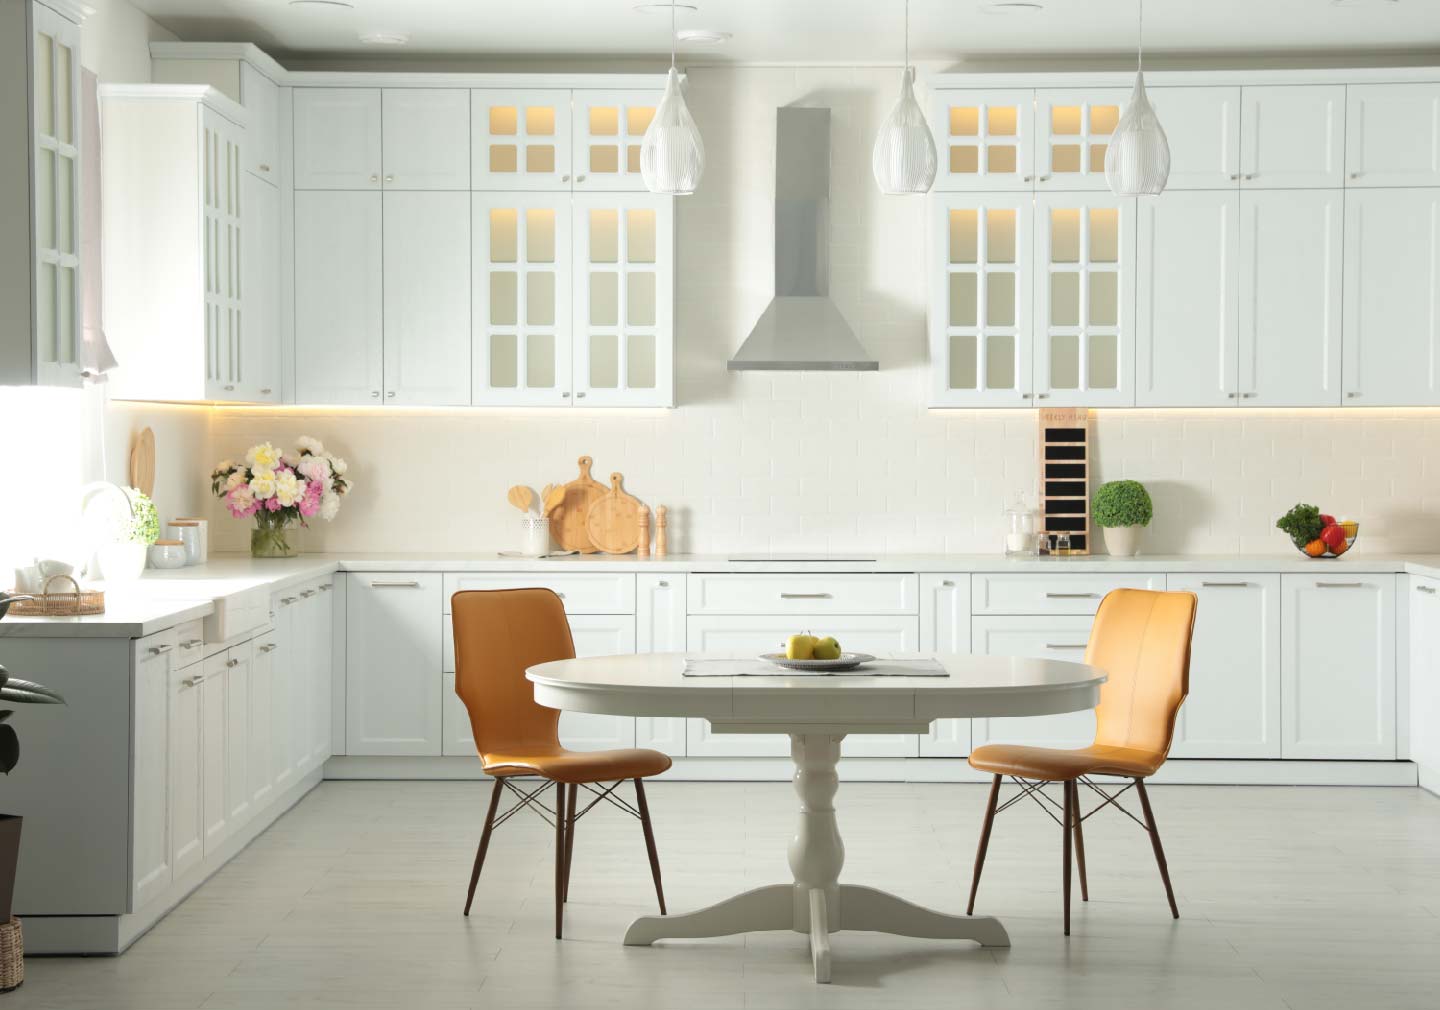 Interior Design Checklist - kitchen interior design with 2 chair and a round table